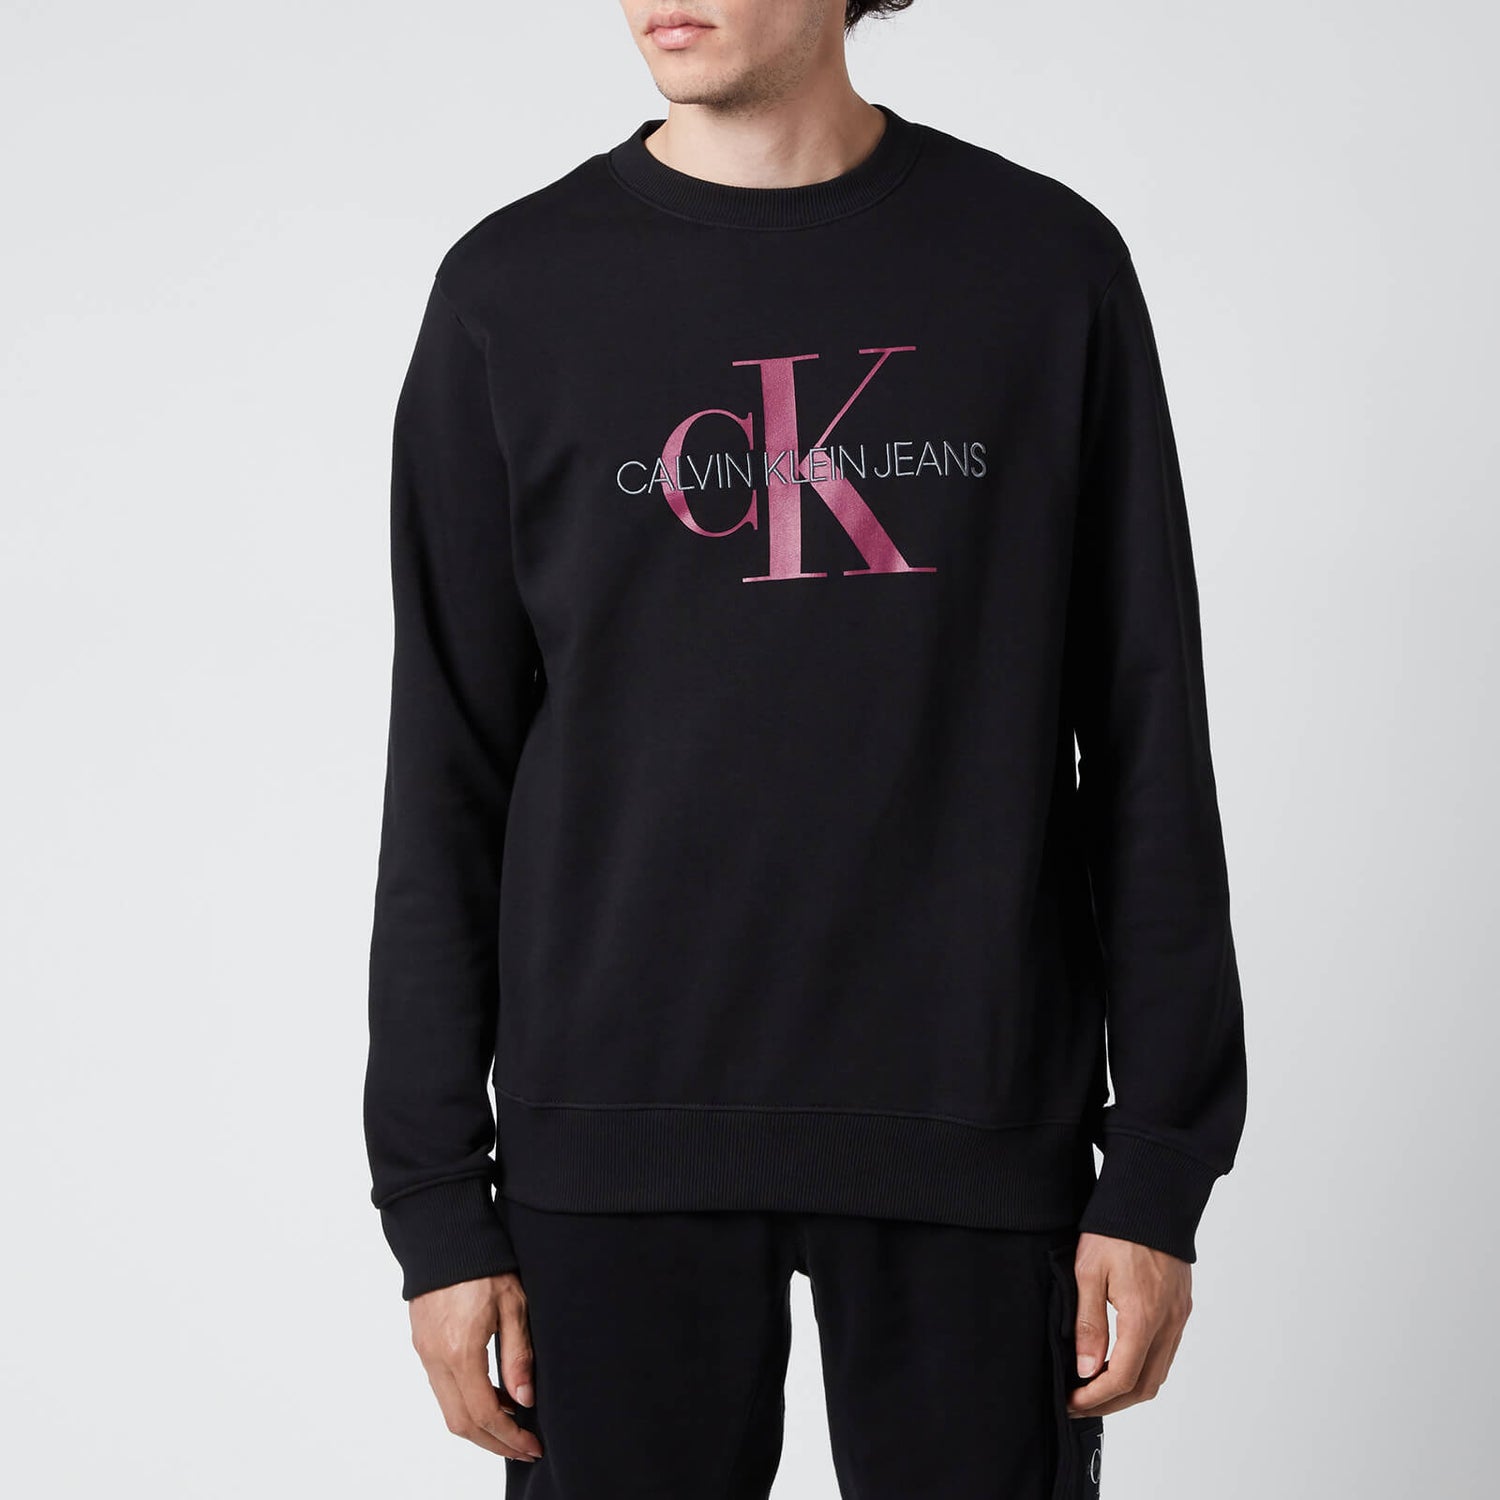 Calvin Klein Jeans Men's Organic Cotton Monogram Sweatshirt - Black